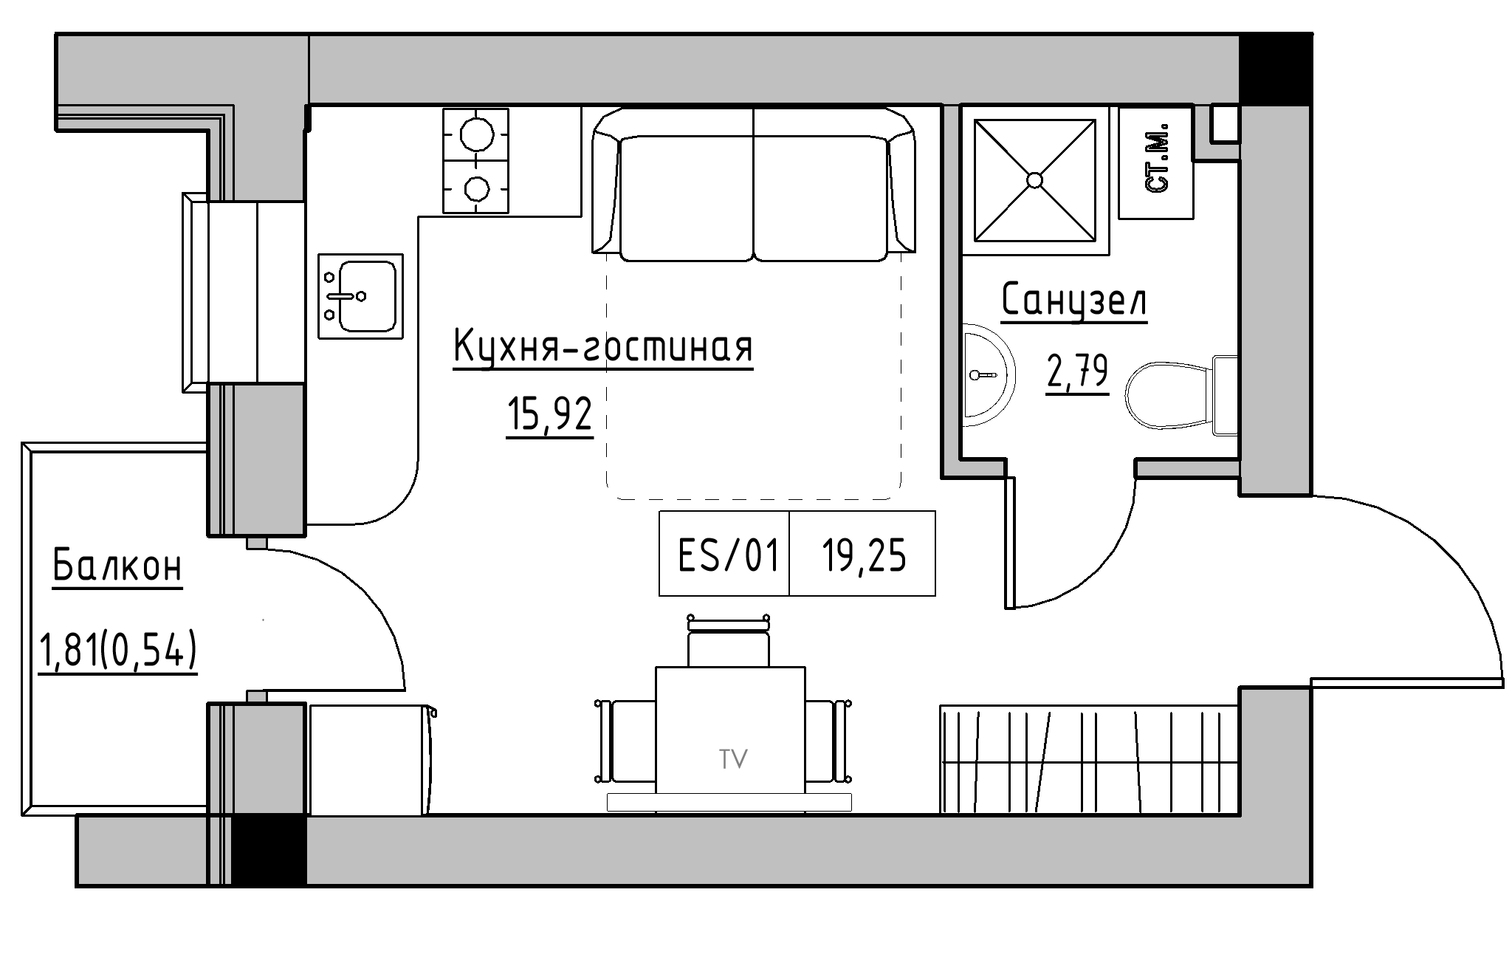 Planning Smart flats area 19.25m2, KS-013-05/0004.